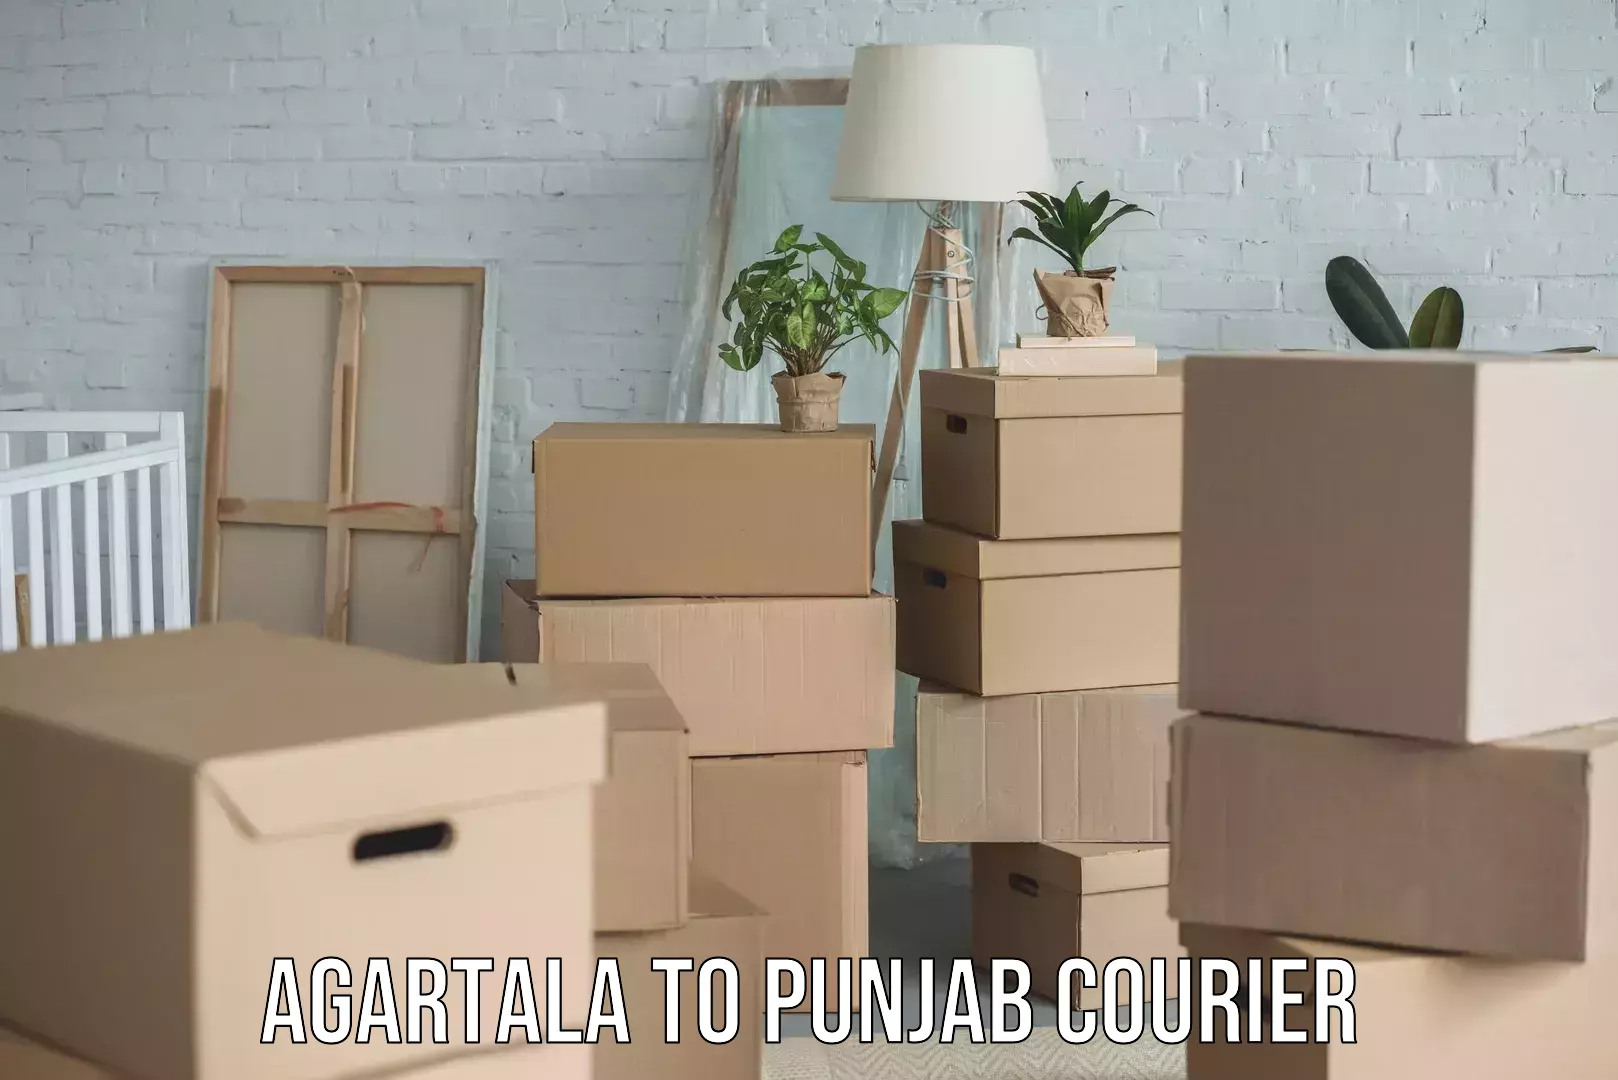 Courier service comparison Agartala to Punjab